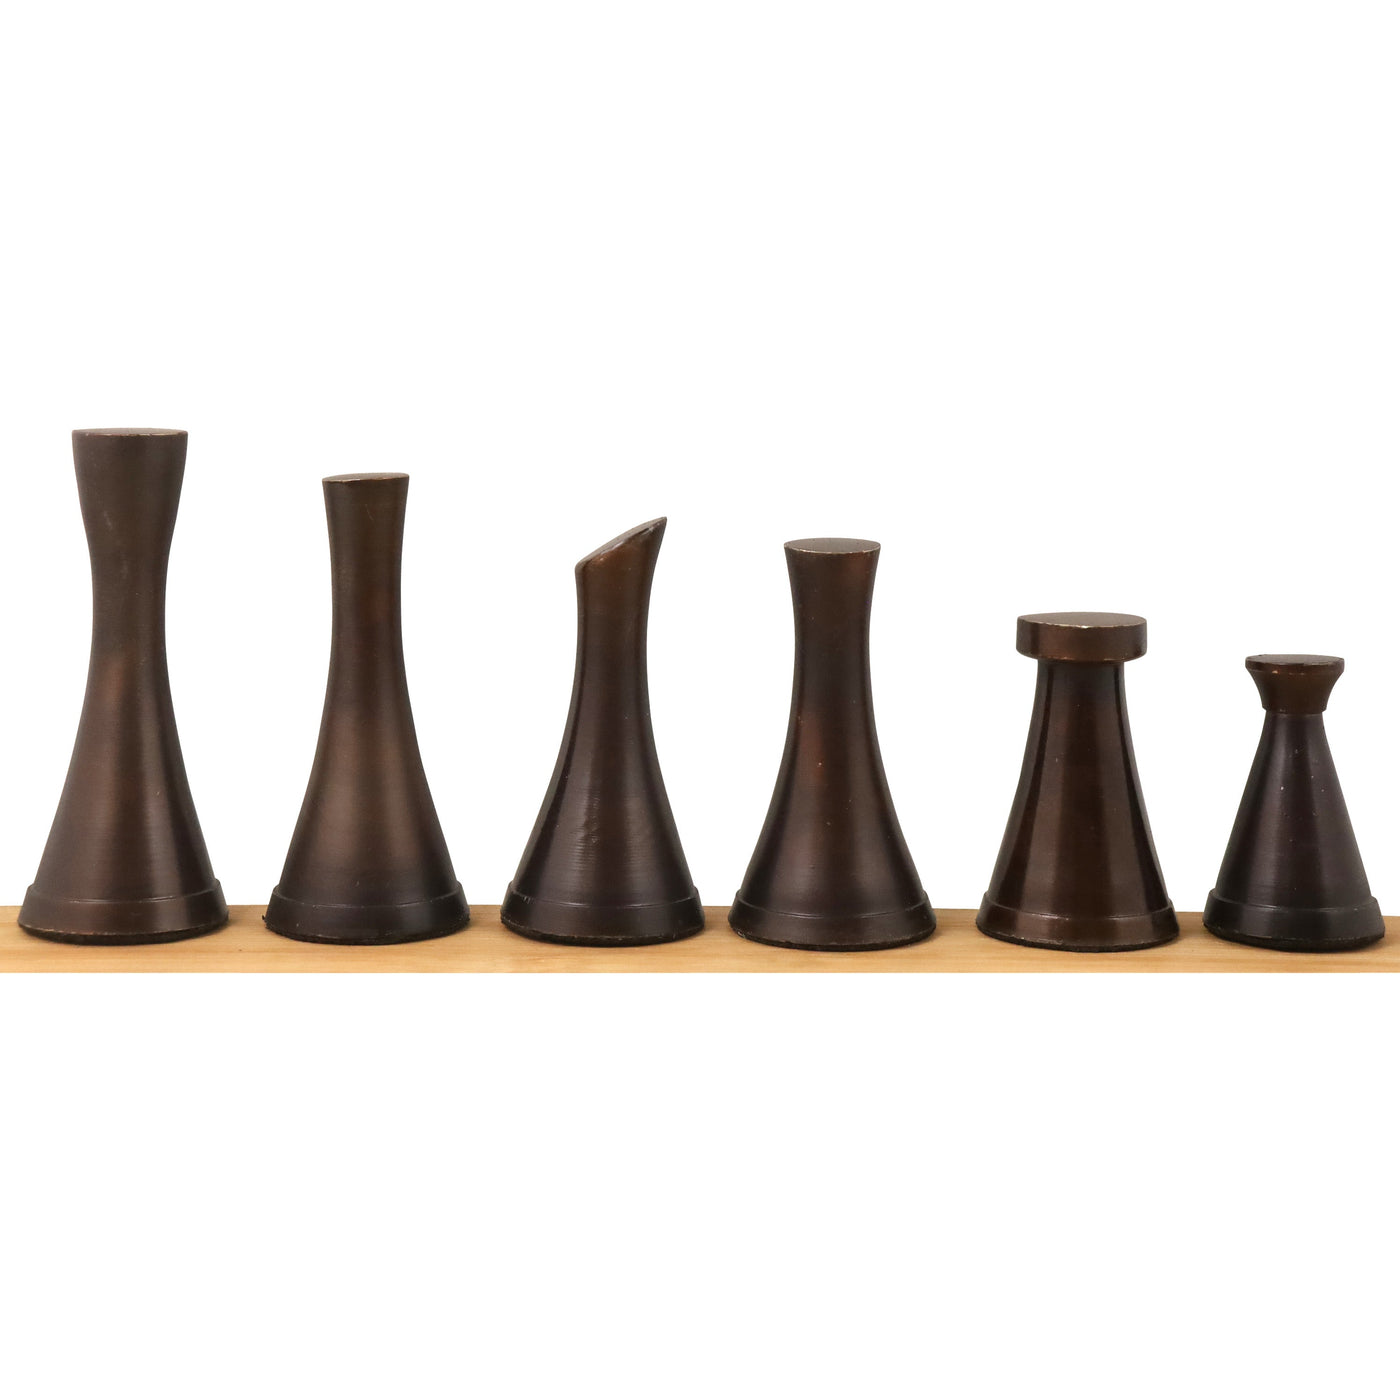 Brass Metal Luxury Chess Pieces Only Set - Silver & Antique -  Staunton Chess Set